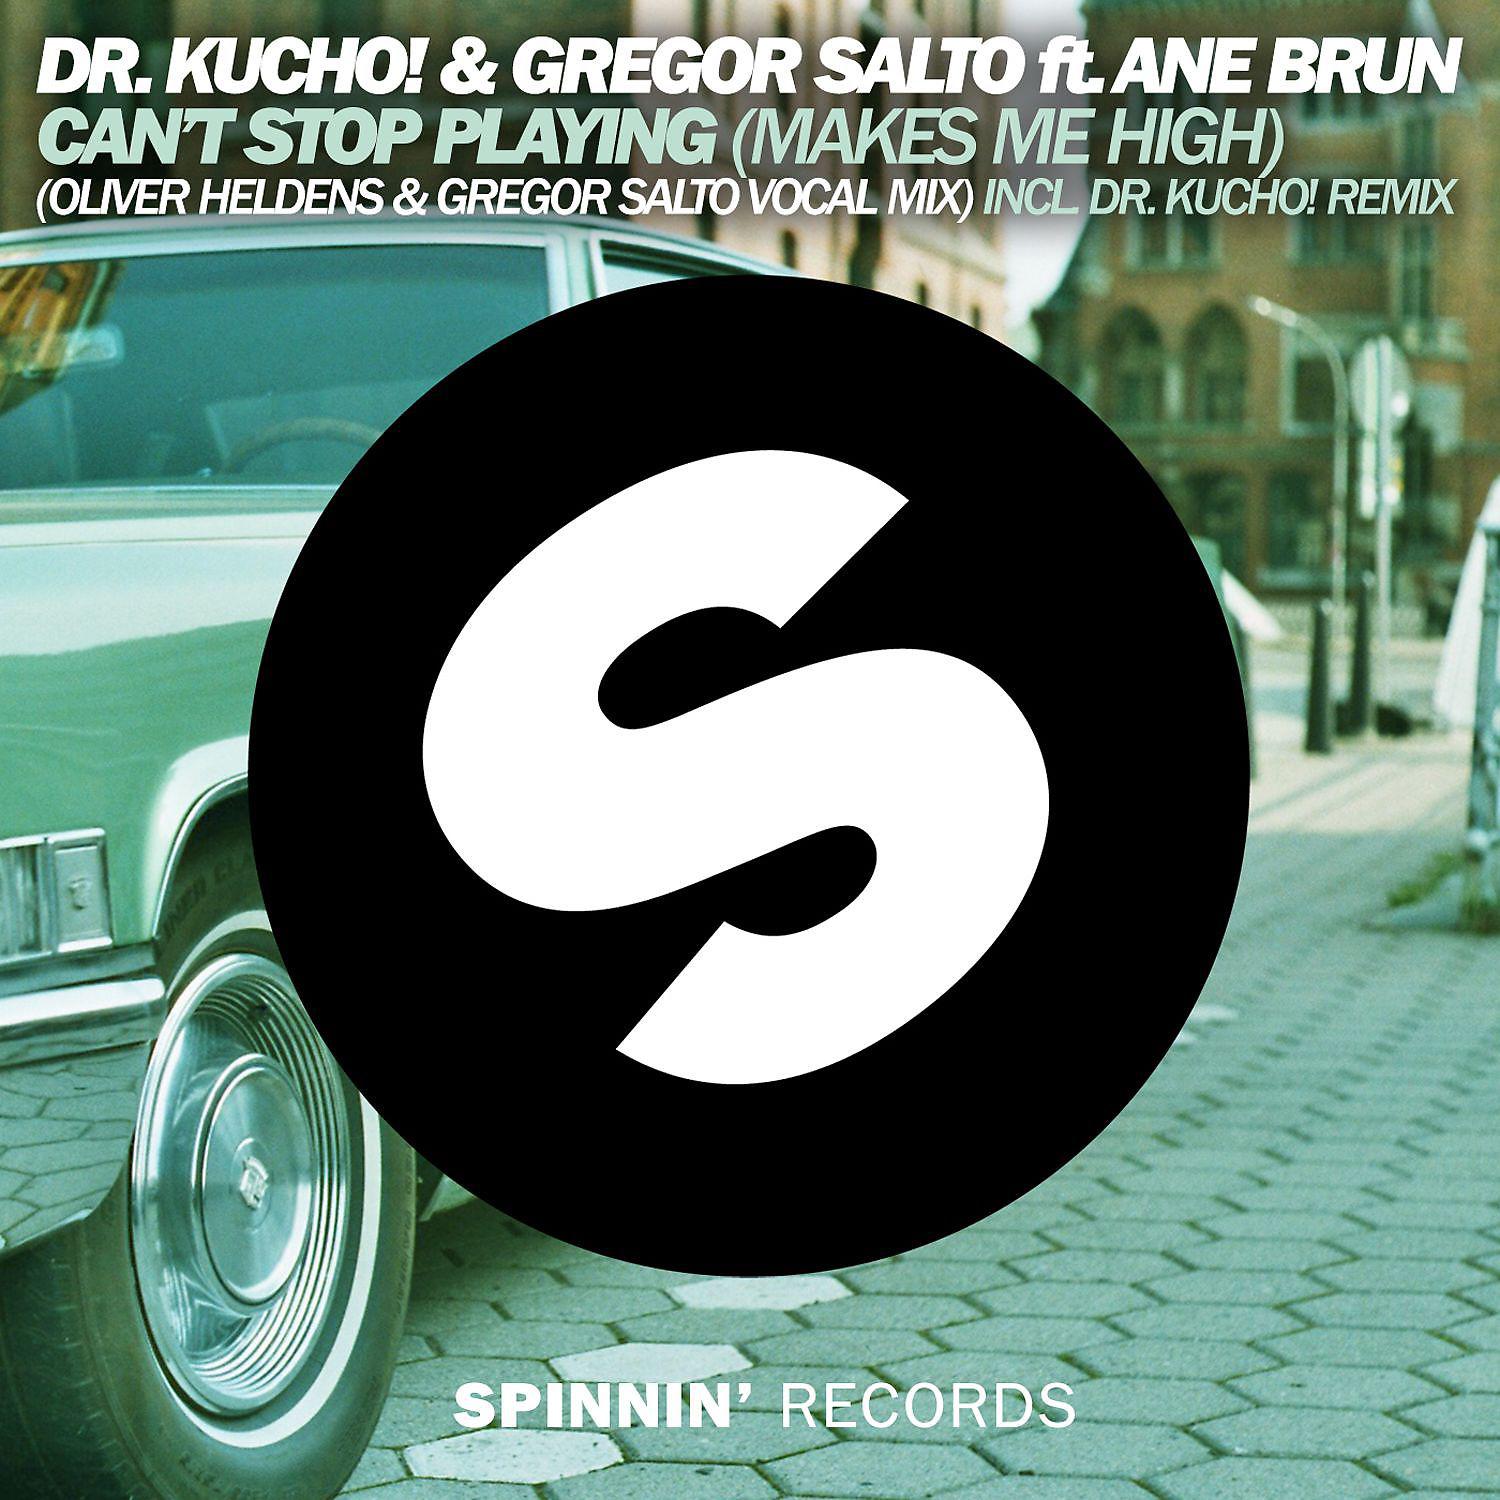 Стоп ремикс. Dr. Kucho & Gregor Salto – can t stop playing. Spinnin Remixes. Dr. Kucho!, Gregor Salto feat. Ane Brun can't stop playing. Can't stop playing.